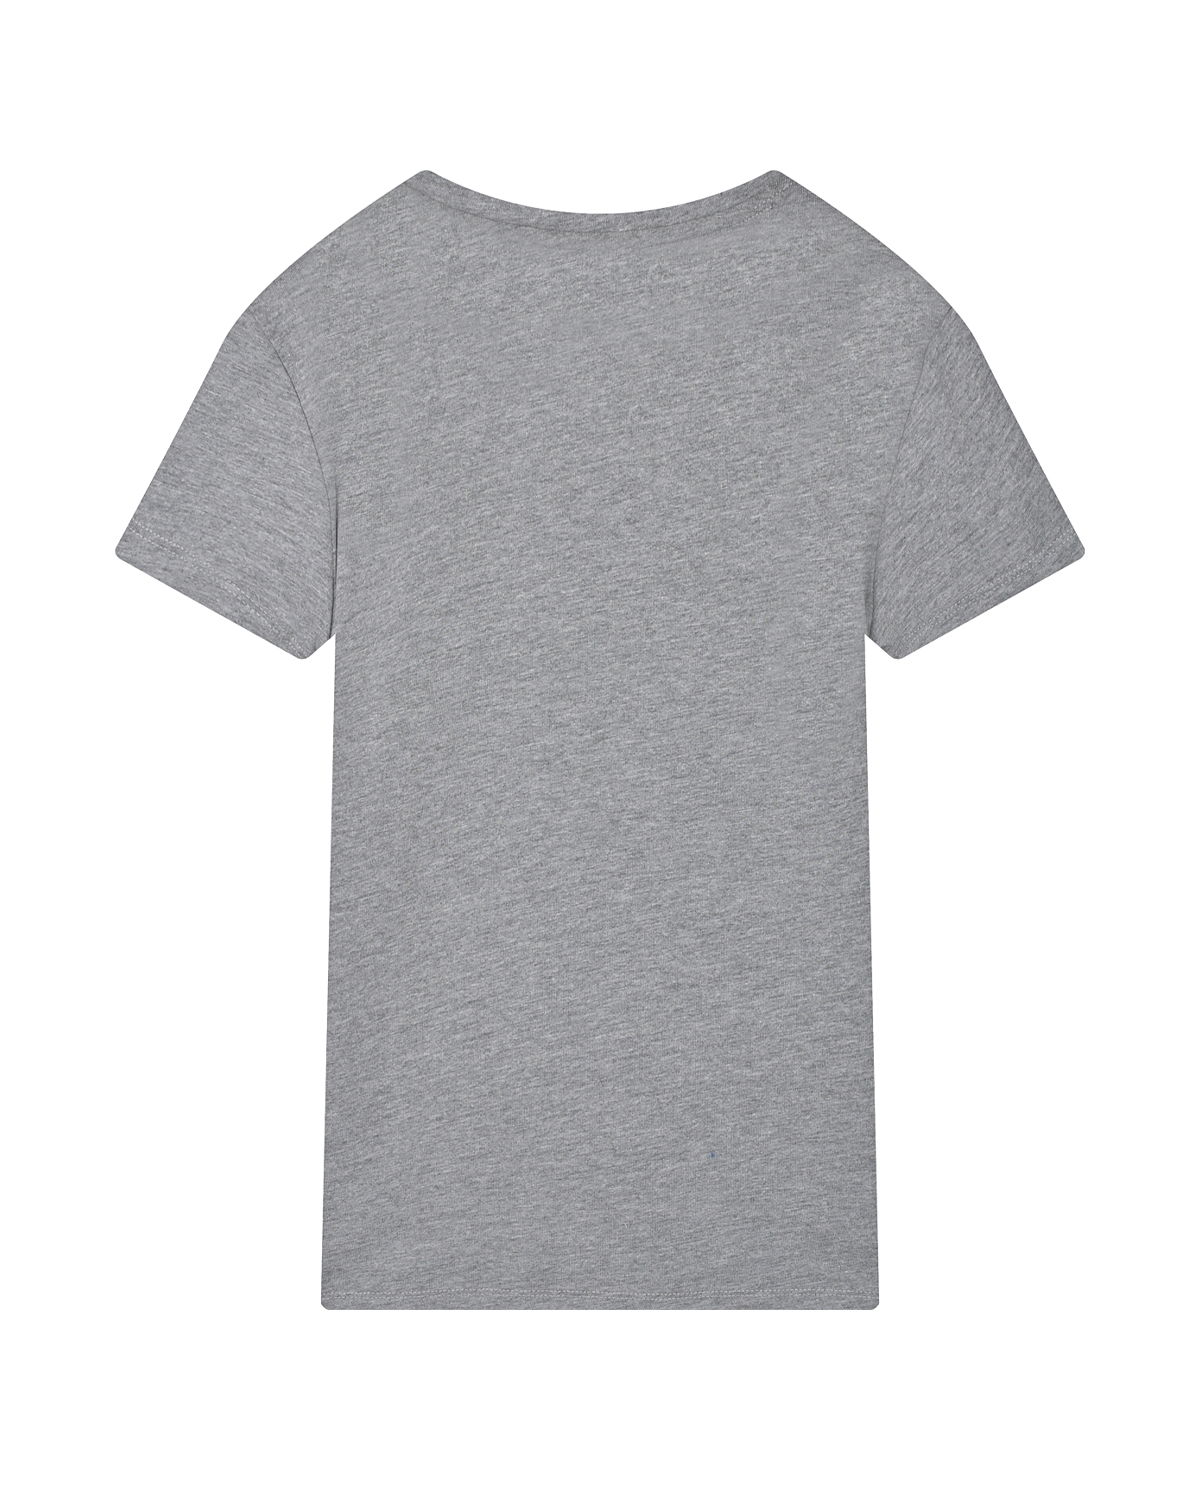 Серая футболка с лого Sport Bikkembergs детская, размер 164, цвет серый - фото 2